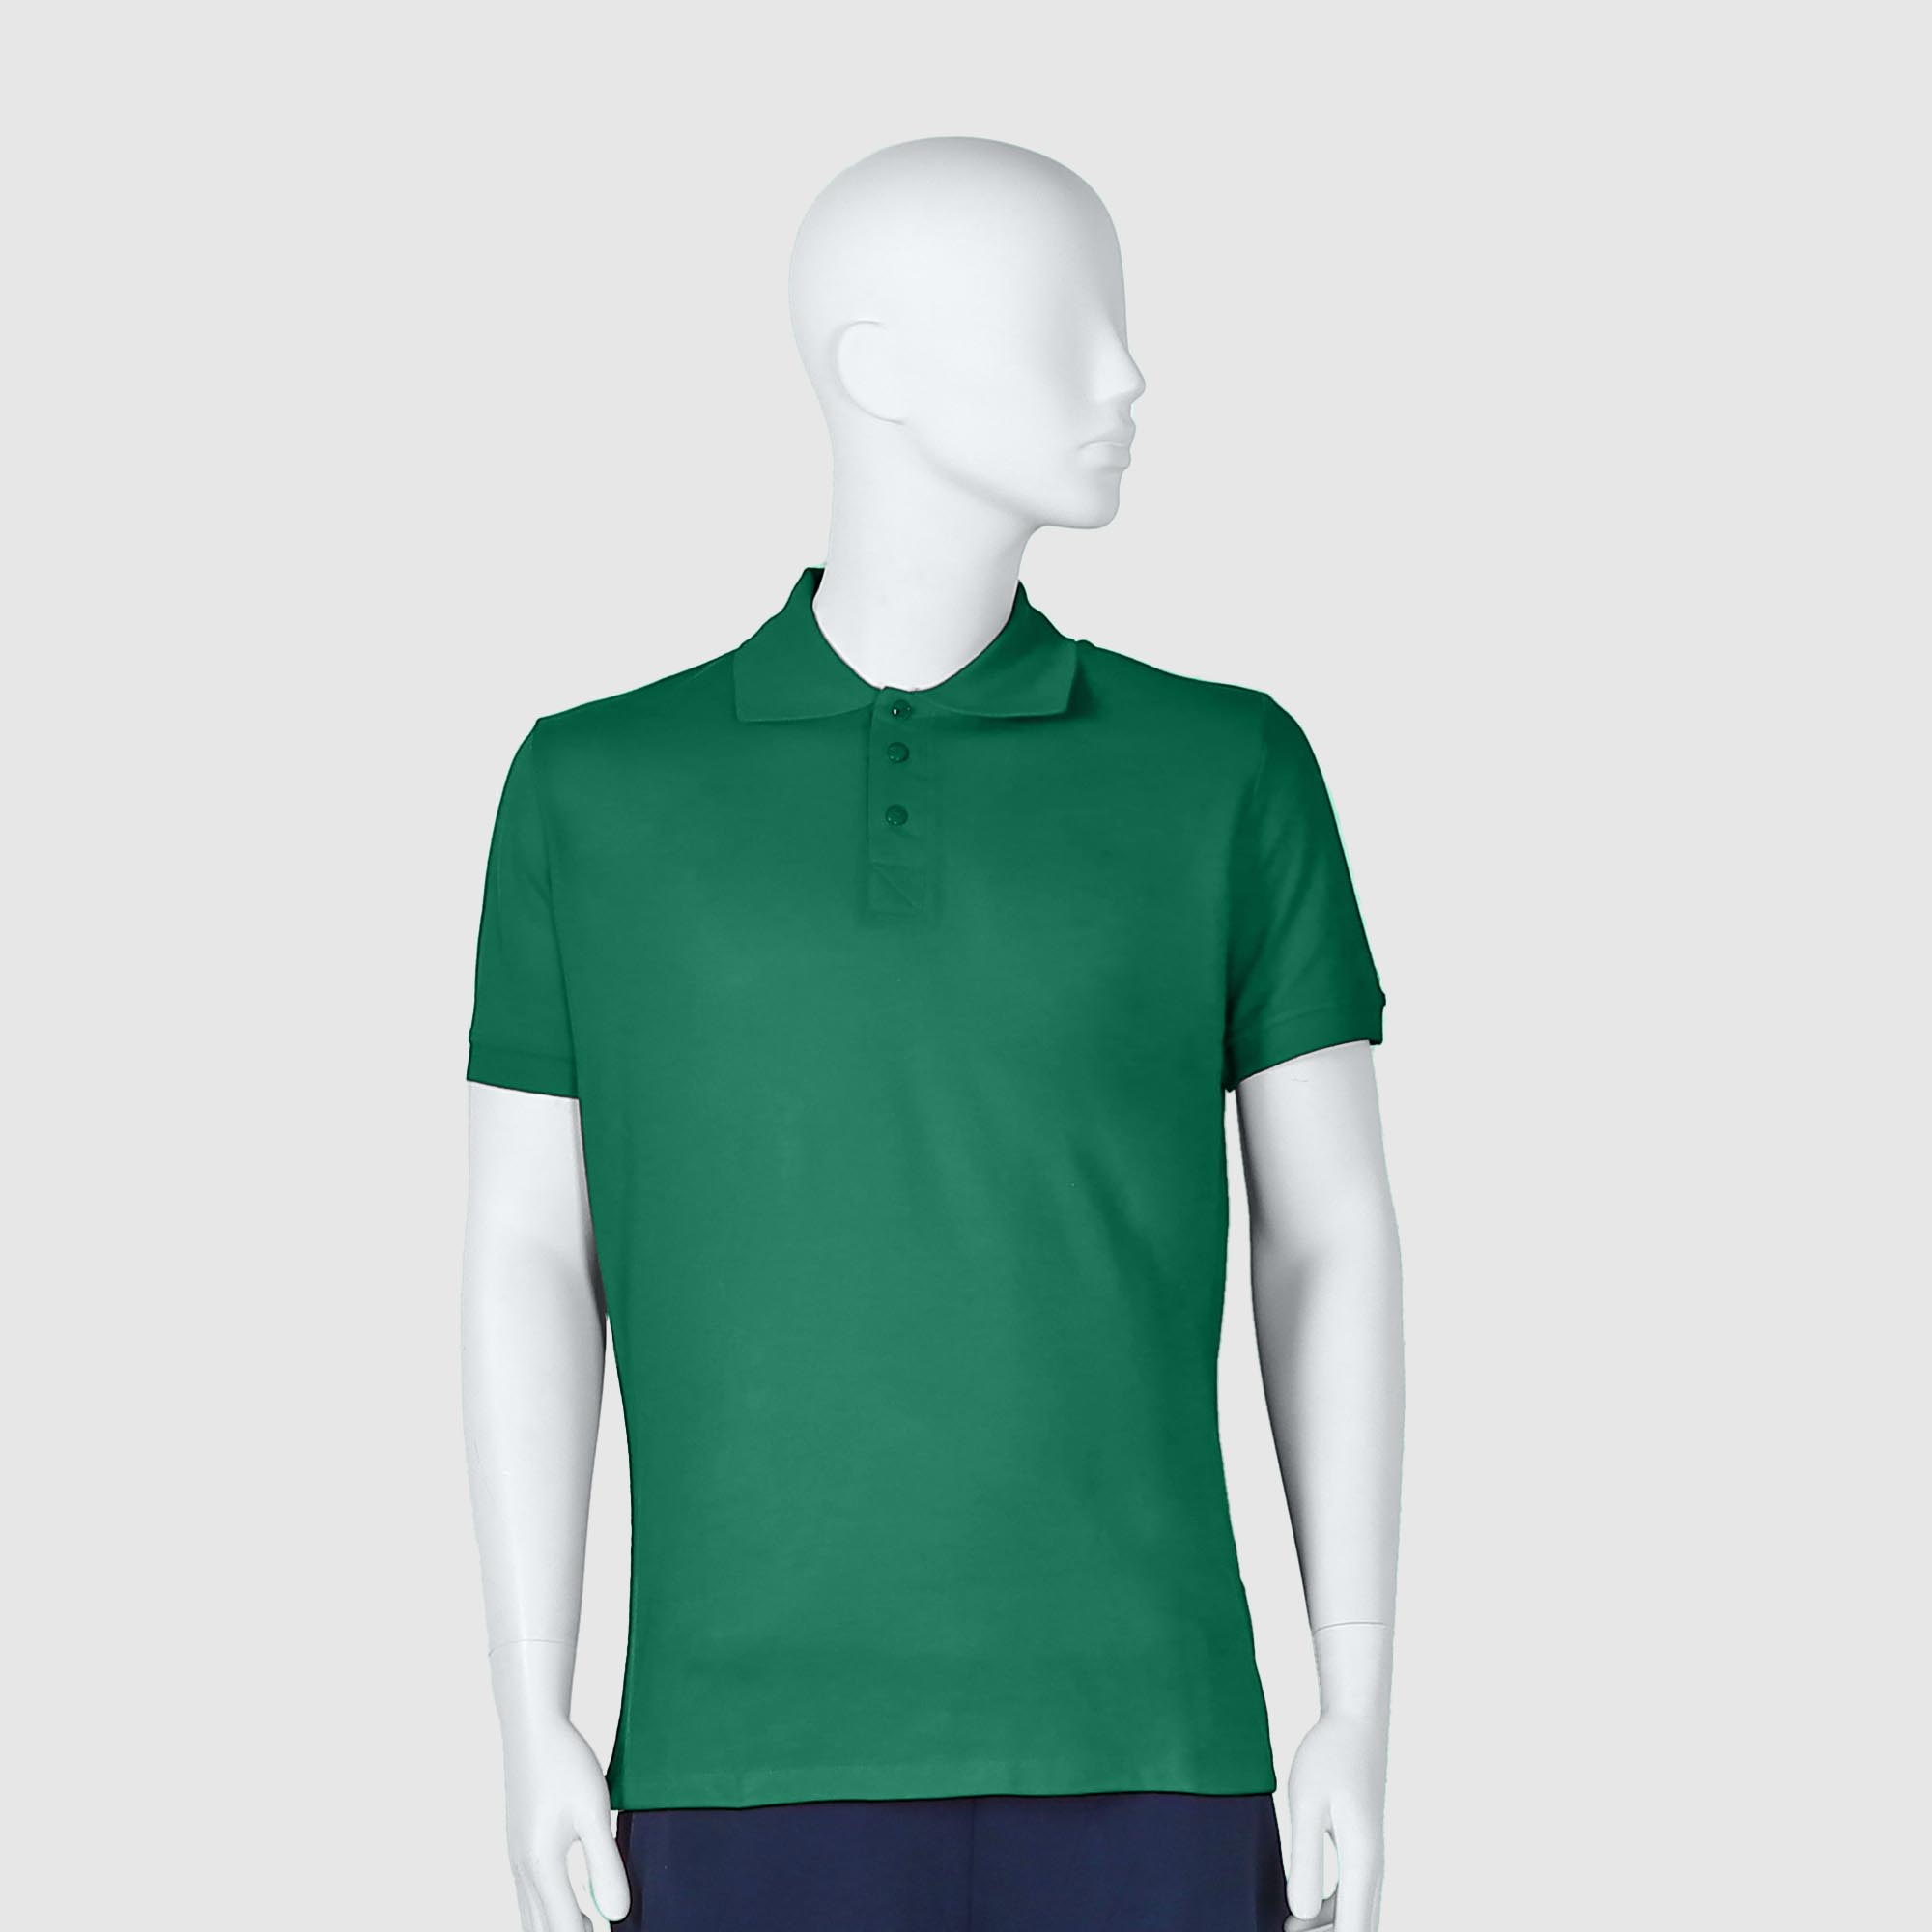 Мужская футболка-поло Diva Teks зелёная (DTD-09), цвет зелёный, размер 44-46 - фото 1